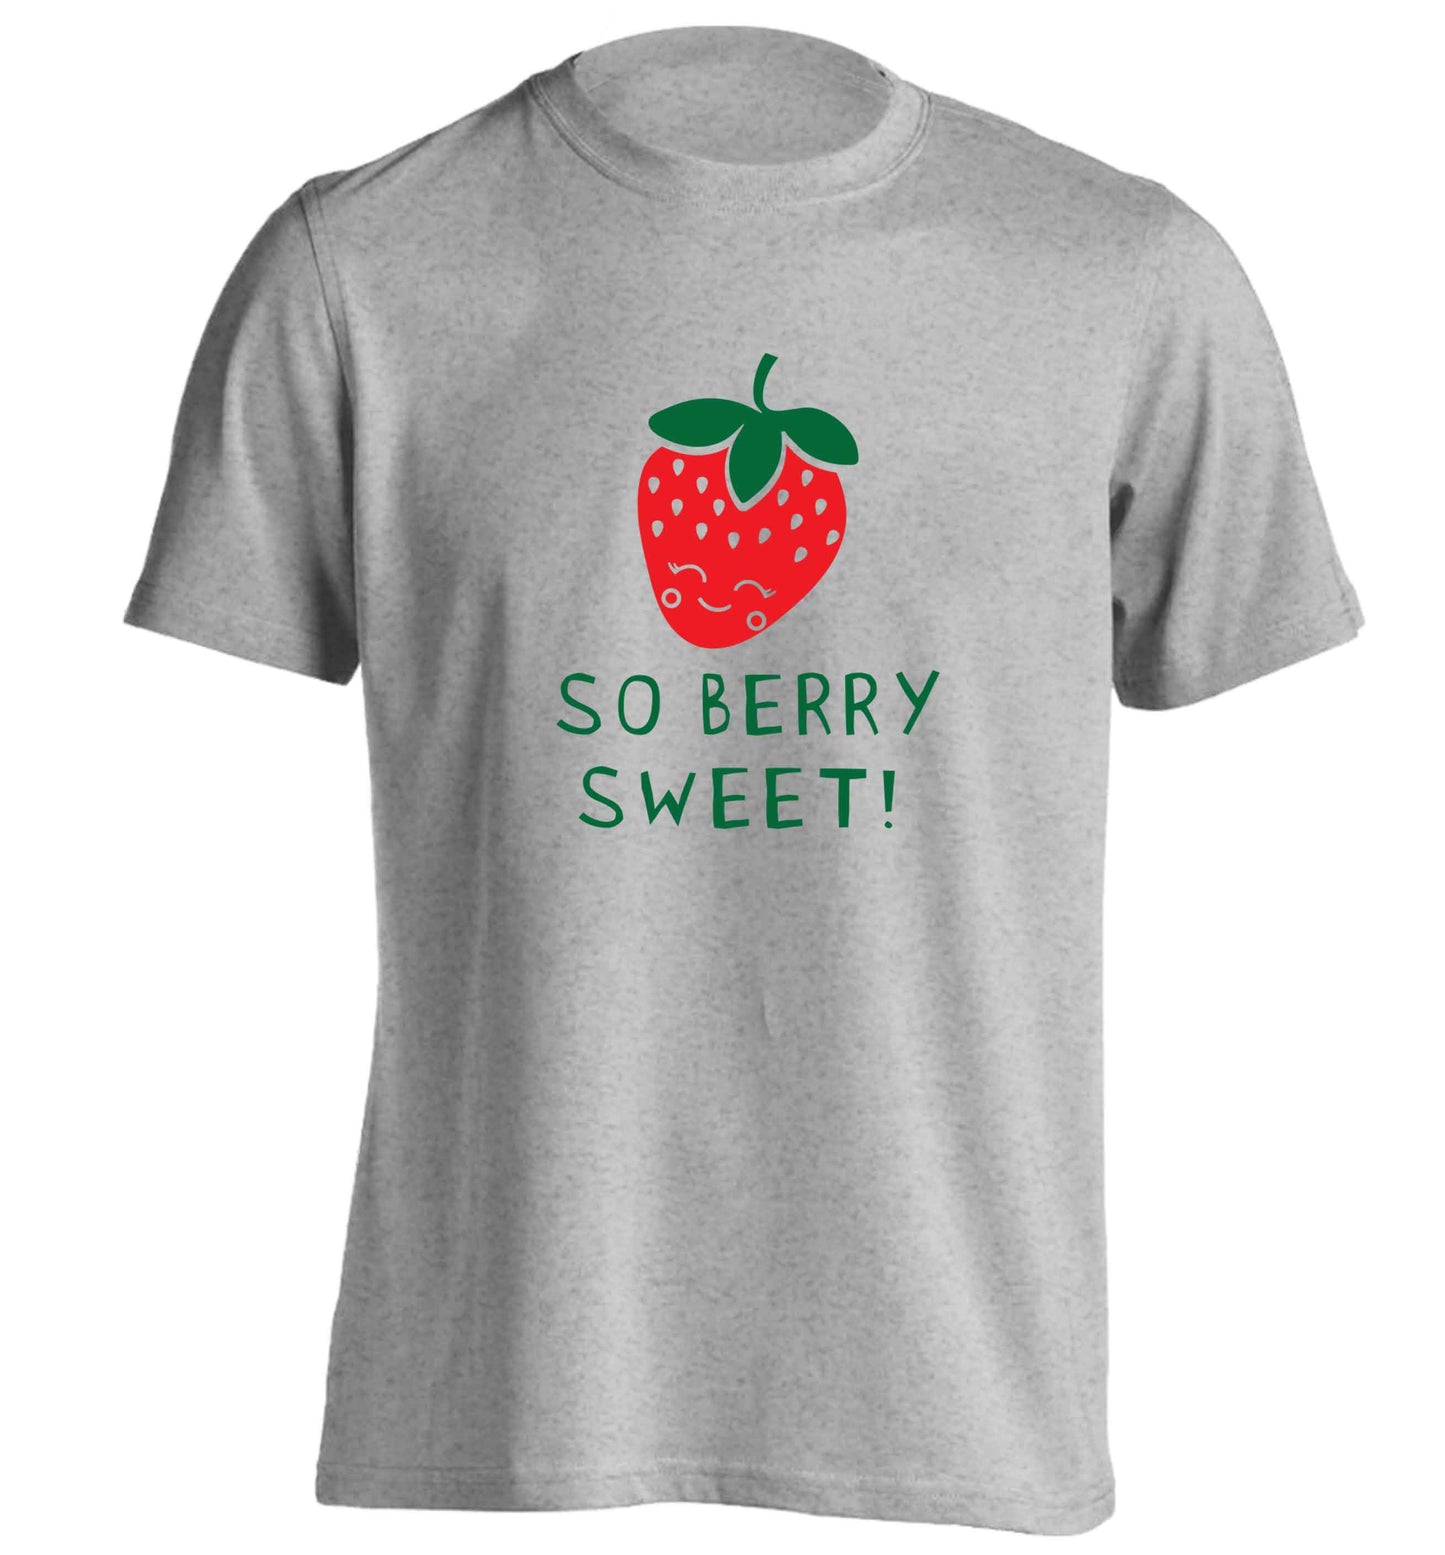 So berry sweet adults unisex grey Tshirt 2XL